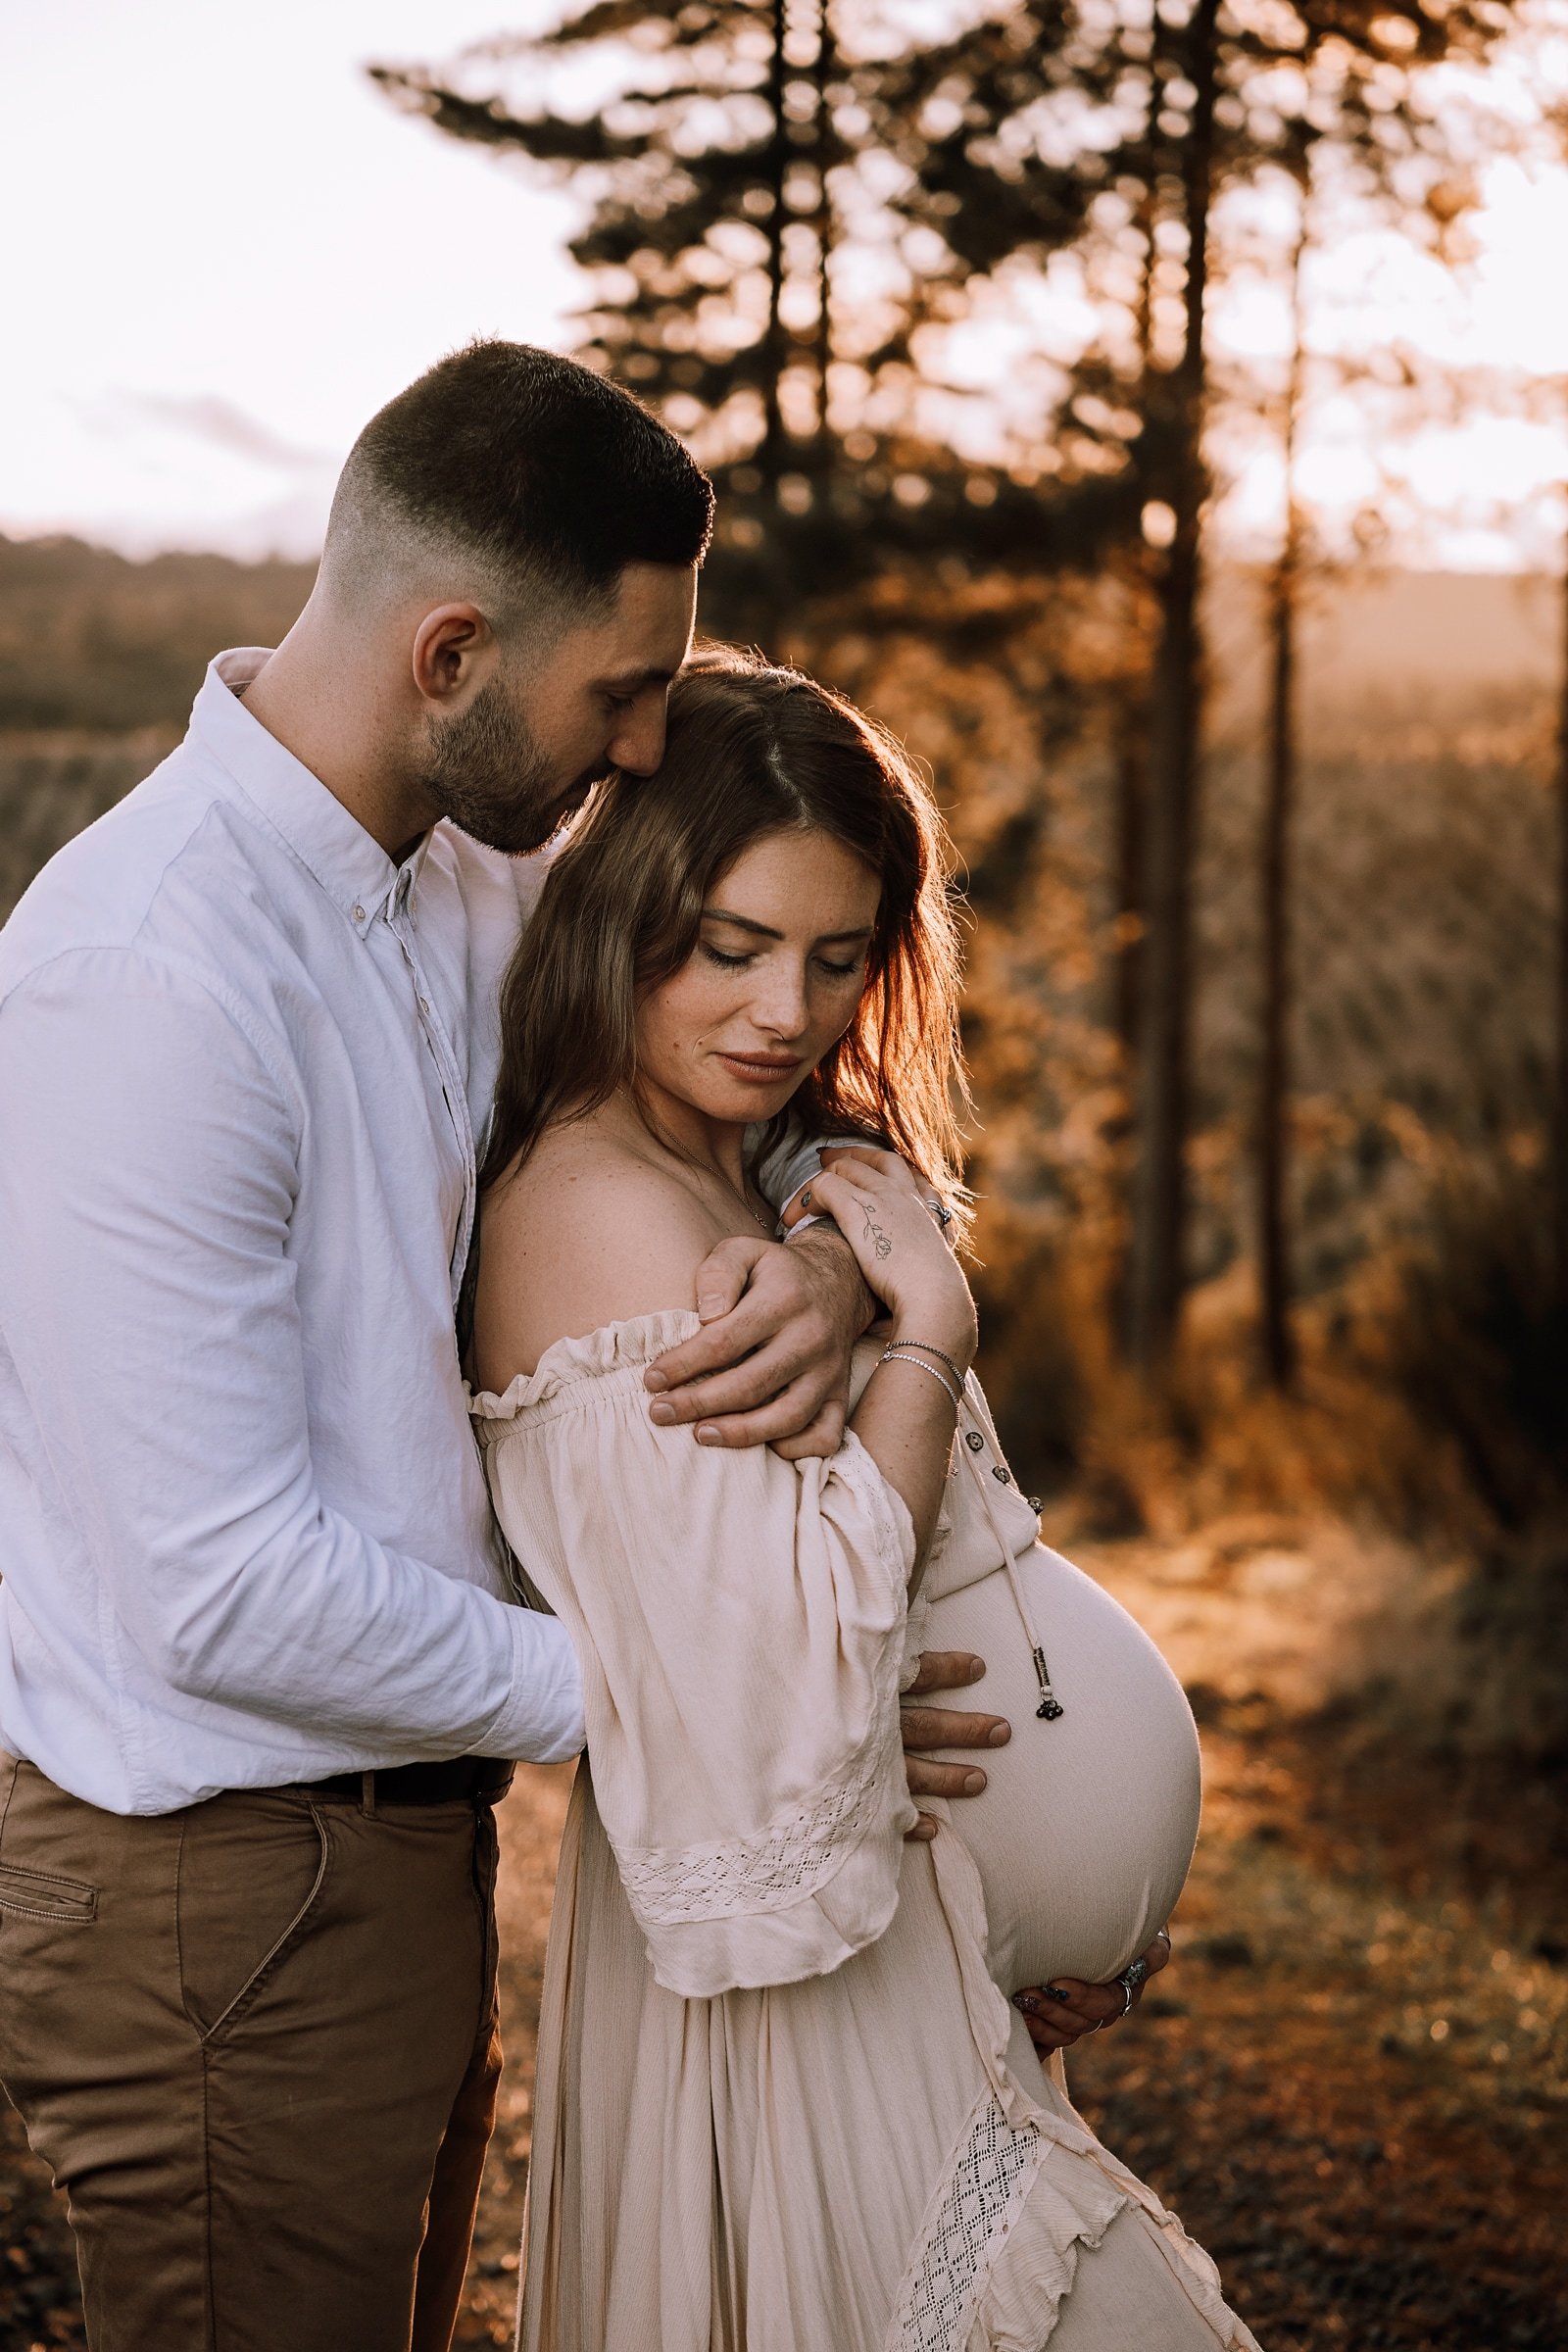 Melbourne Maternity Photographer  | Emma Pender Photography